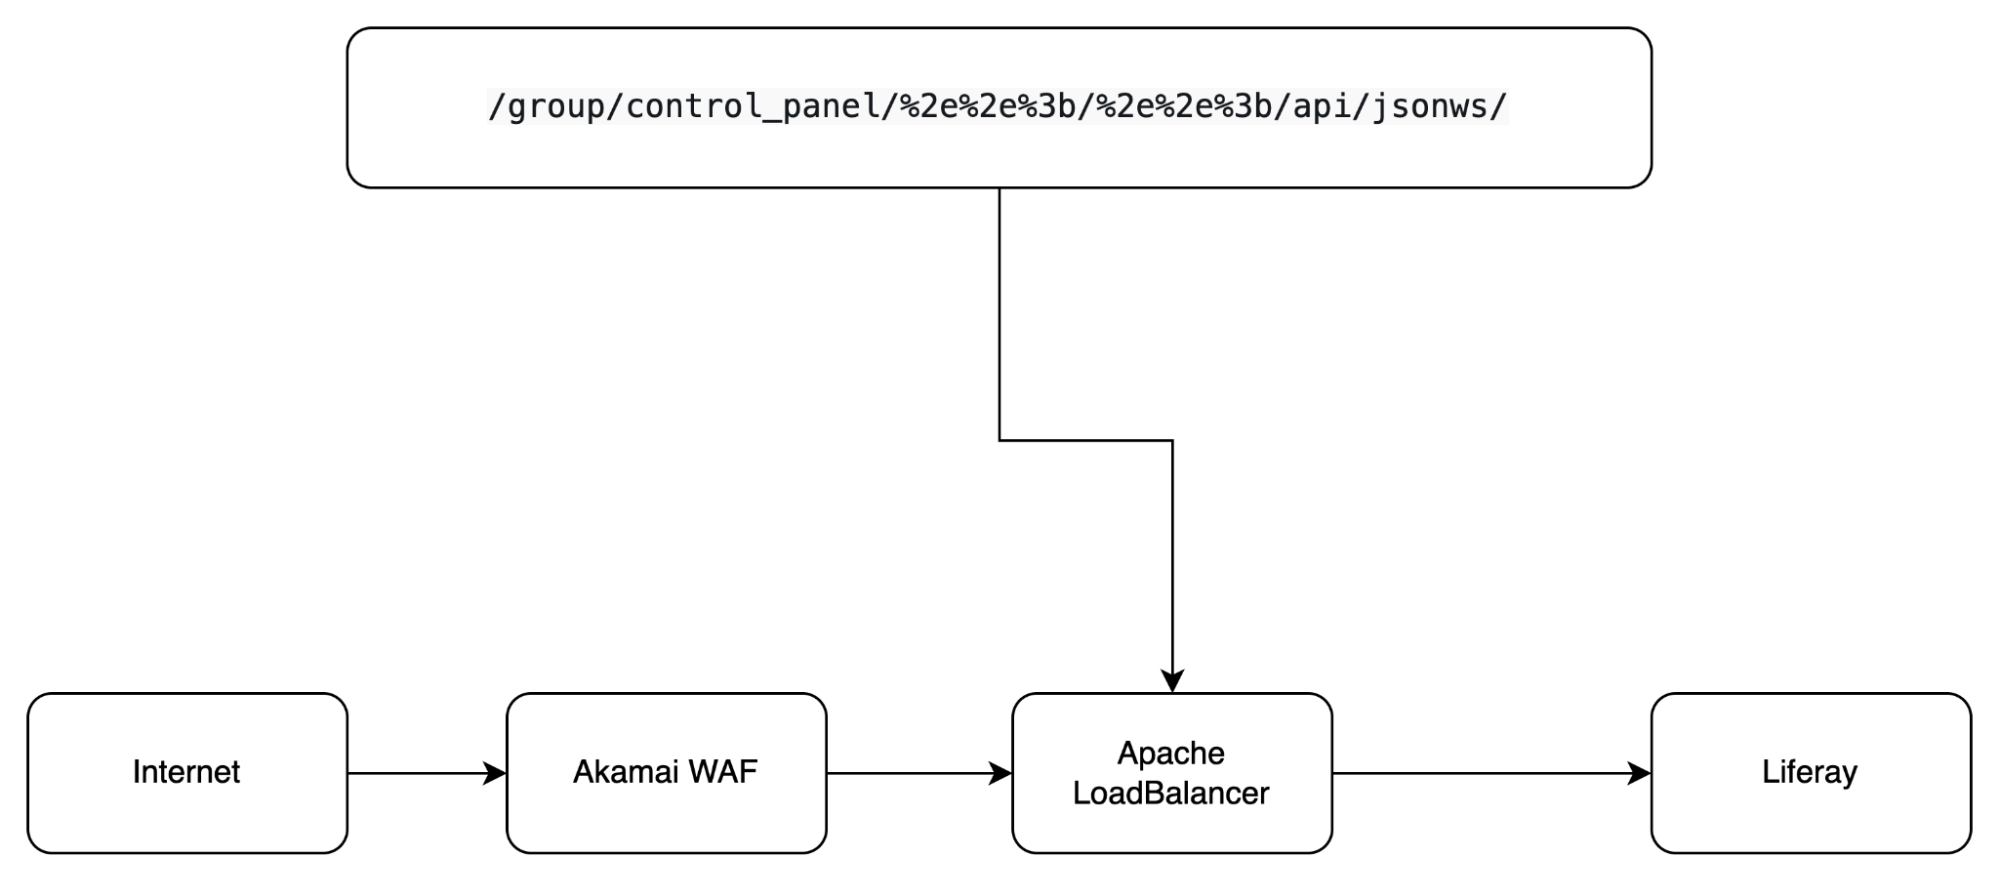 Bypass payload process by Apache LoadBalancer